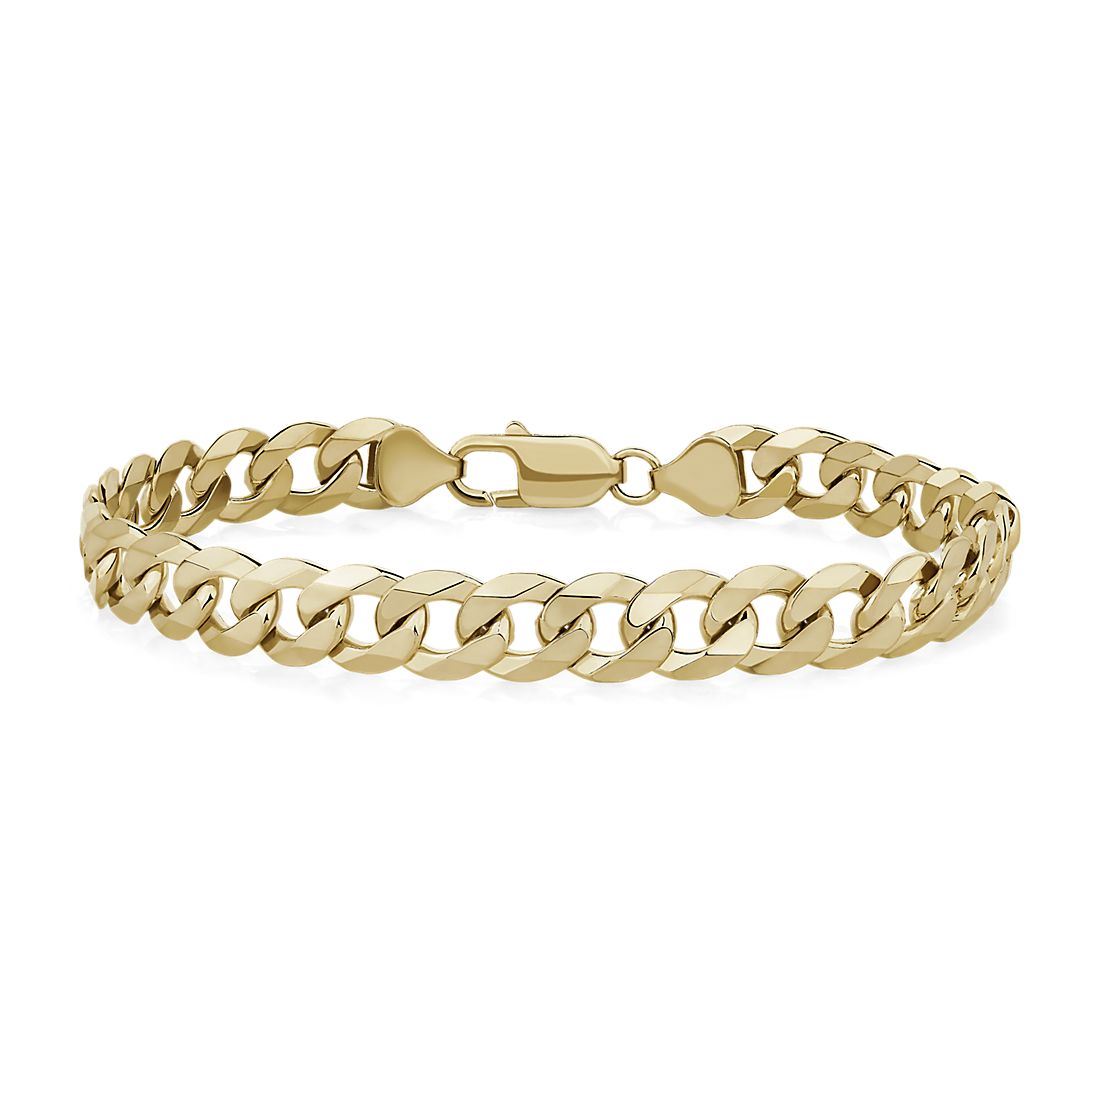 8" Men's Flat Beveled Curb Chain Bracelet in 14k Yellow Gold (8 mm)